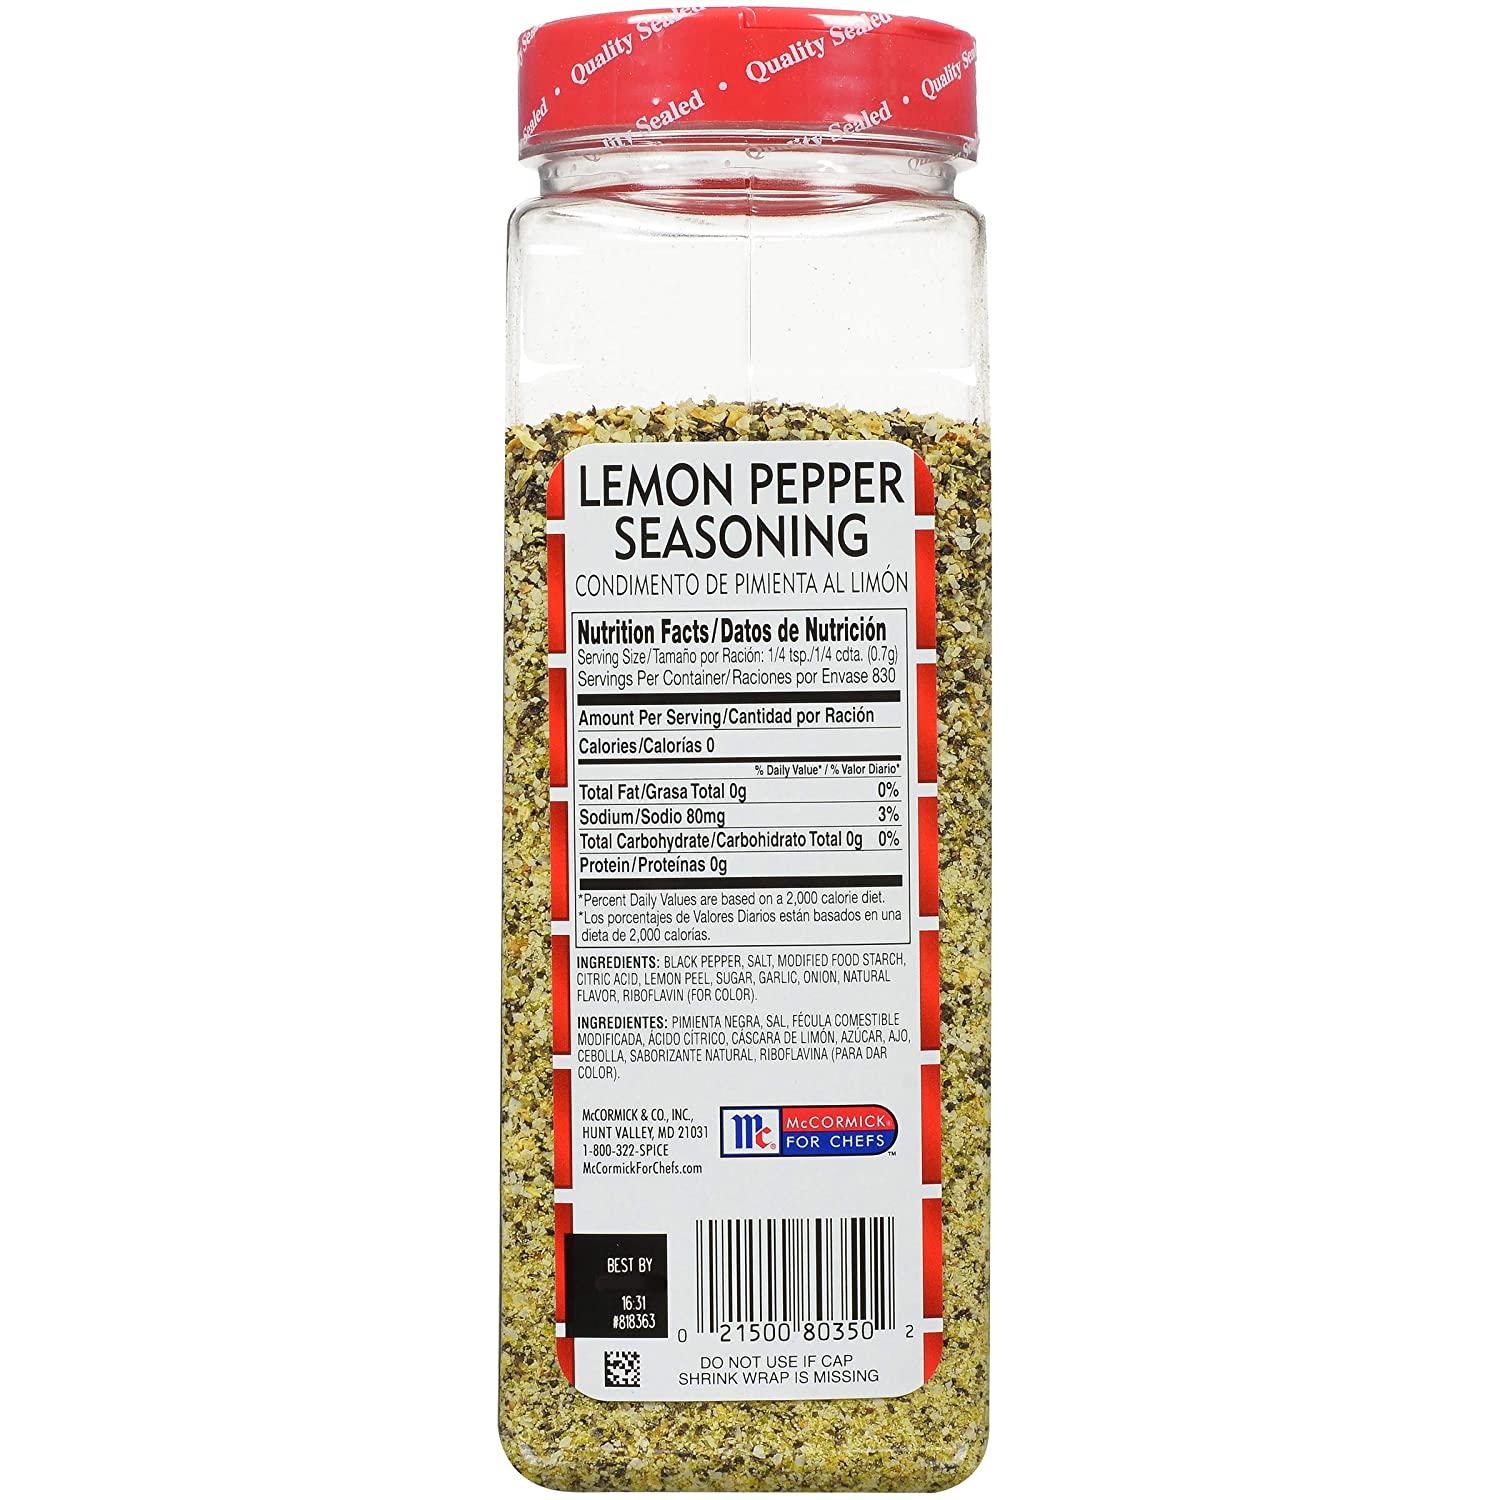 Lawry's Black Pepper Seasoned Salt, 5 oz - Foods Co.